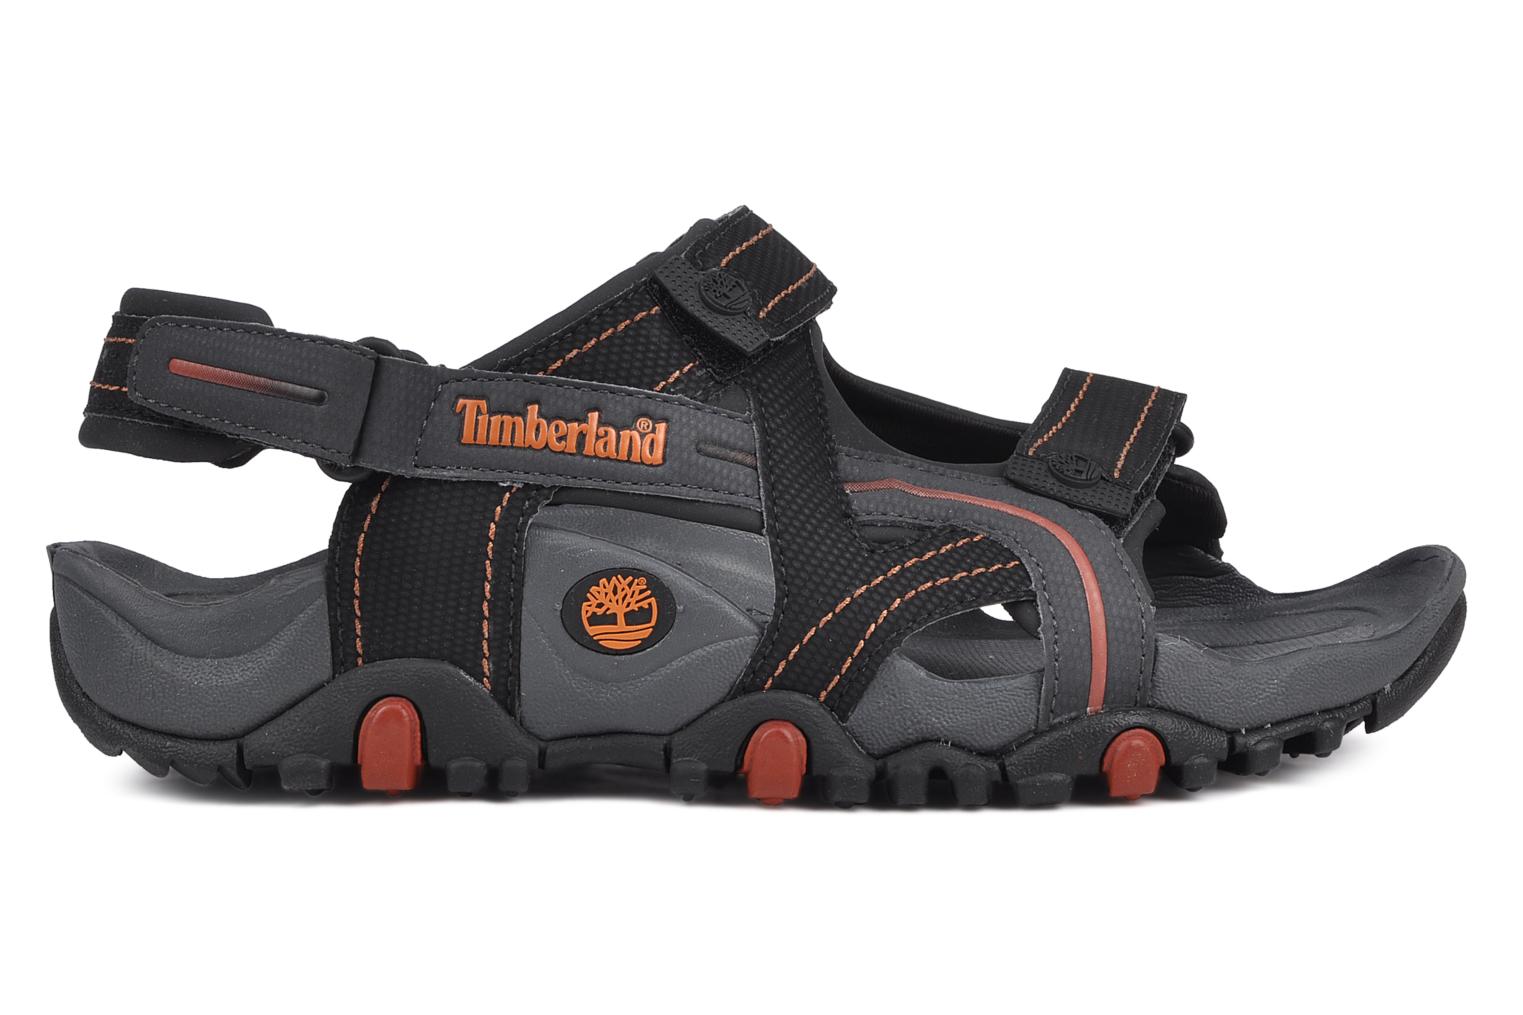 Timberland Sandal Granite Trails Sport Shoes In Black At Uk 60440 